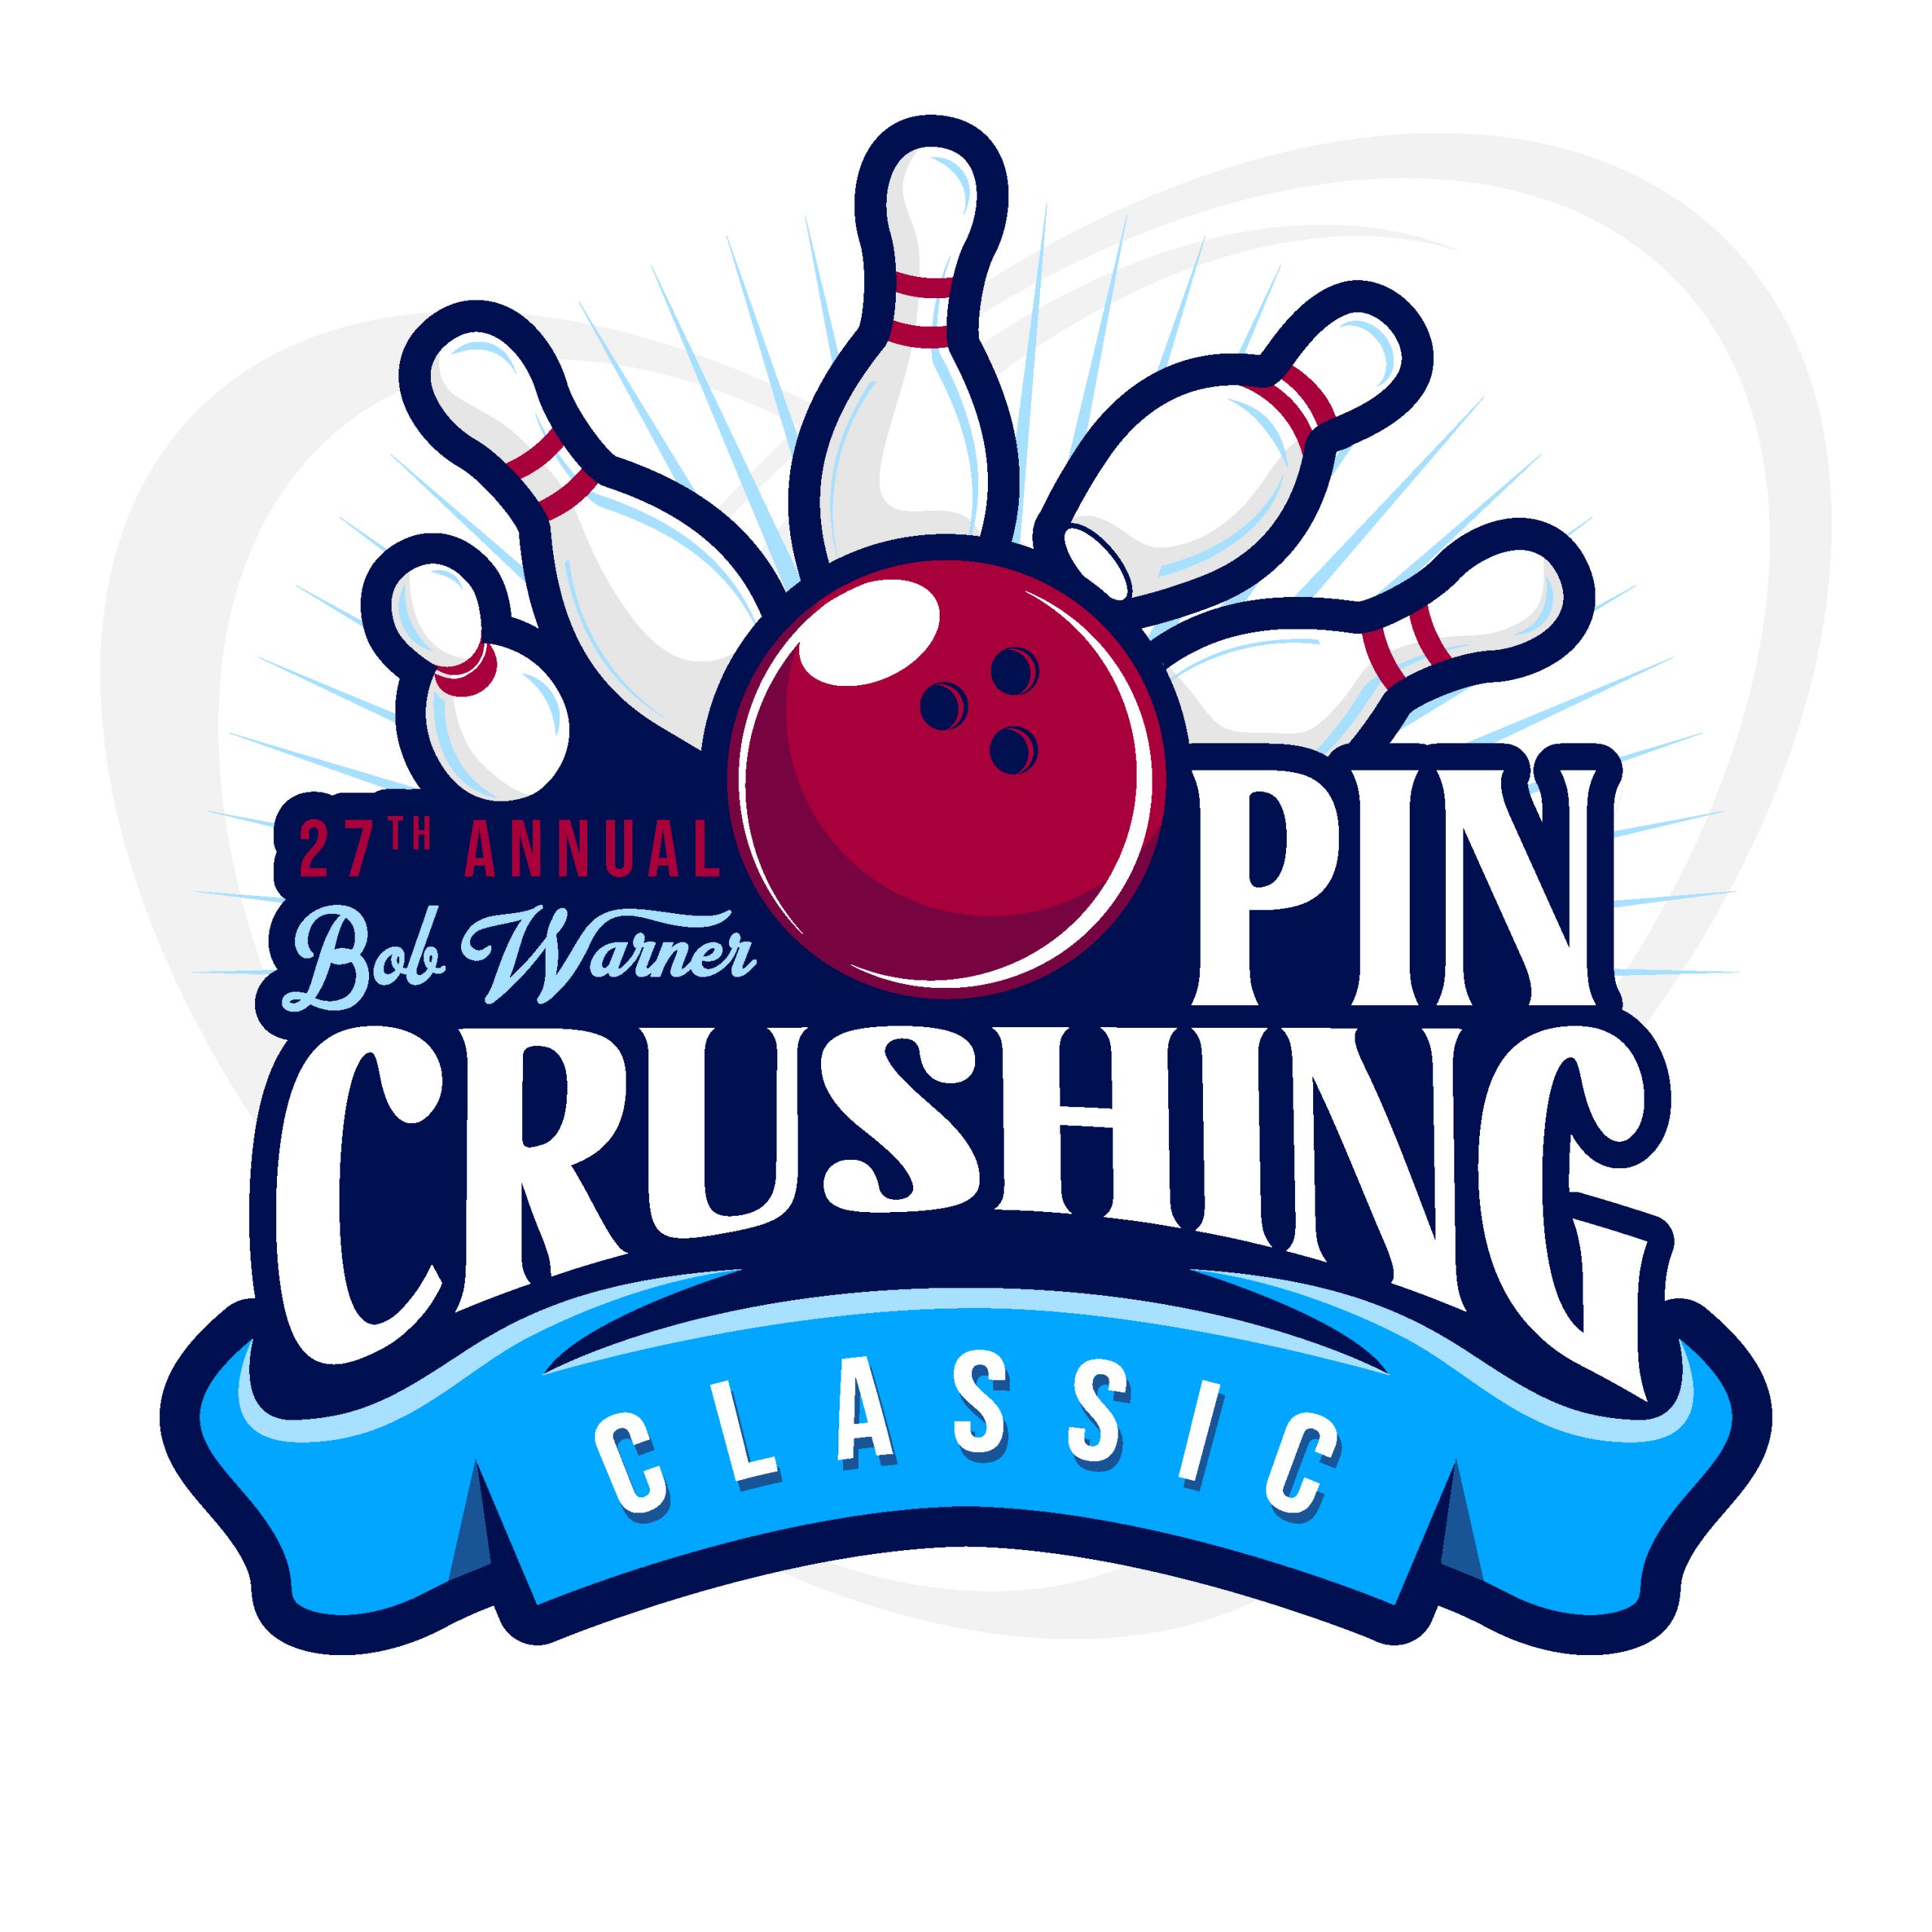 The Bob Warner Pin Crushing Classic logo